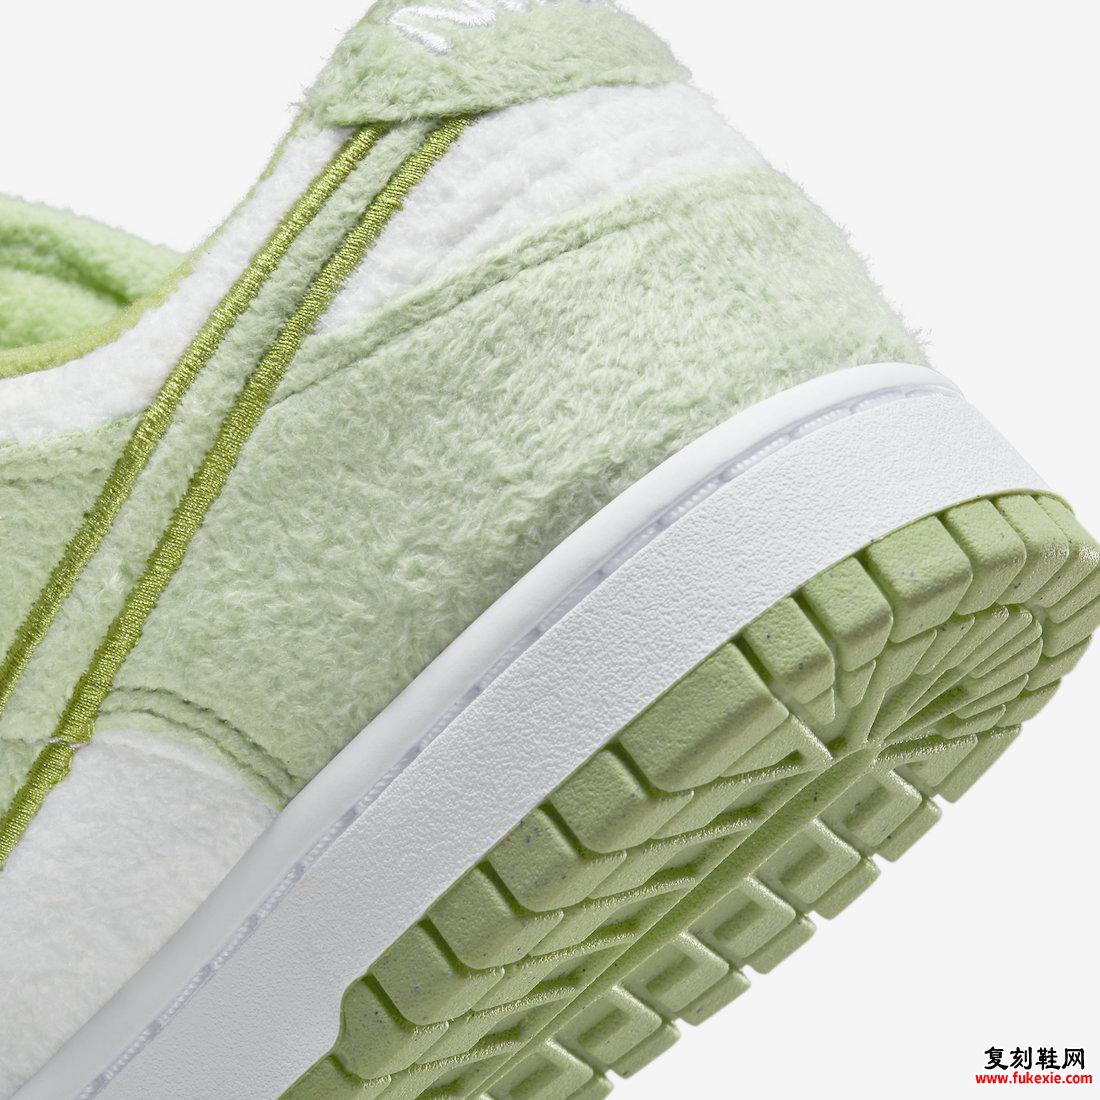 Nike Dunk Low Fleece Green DQ7579-300 发布日期